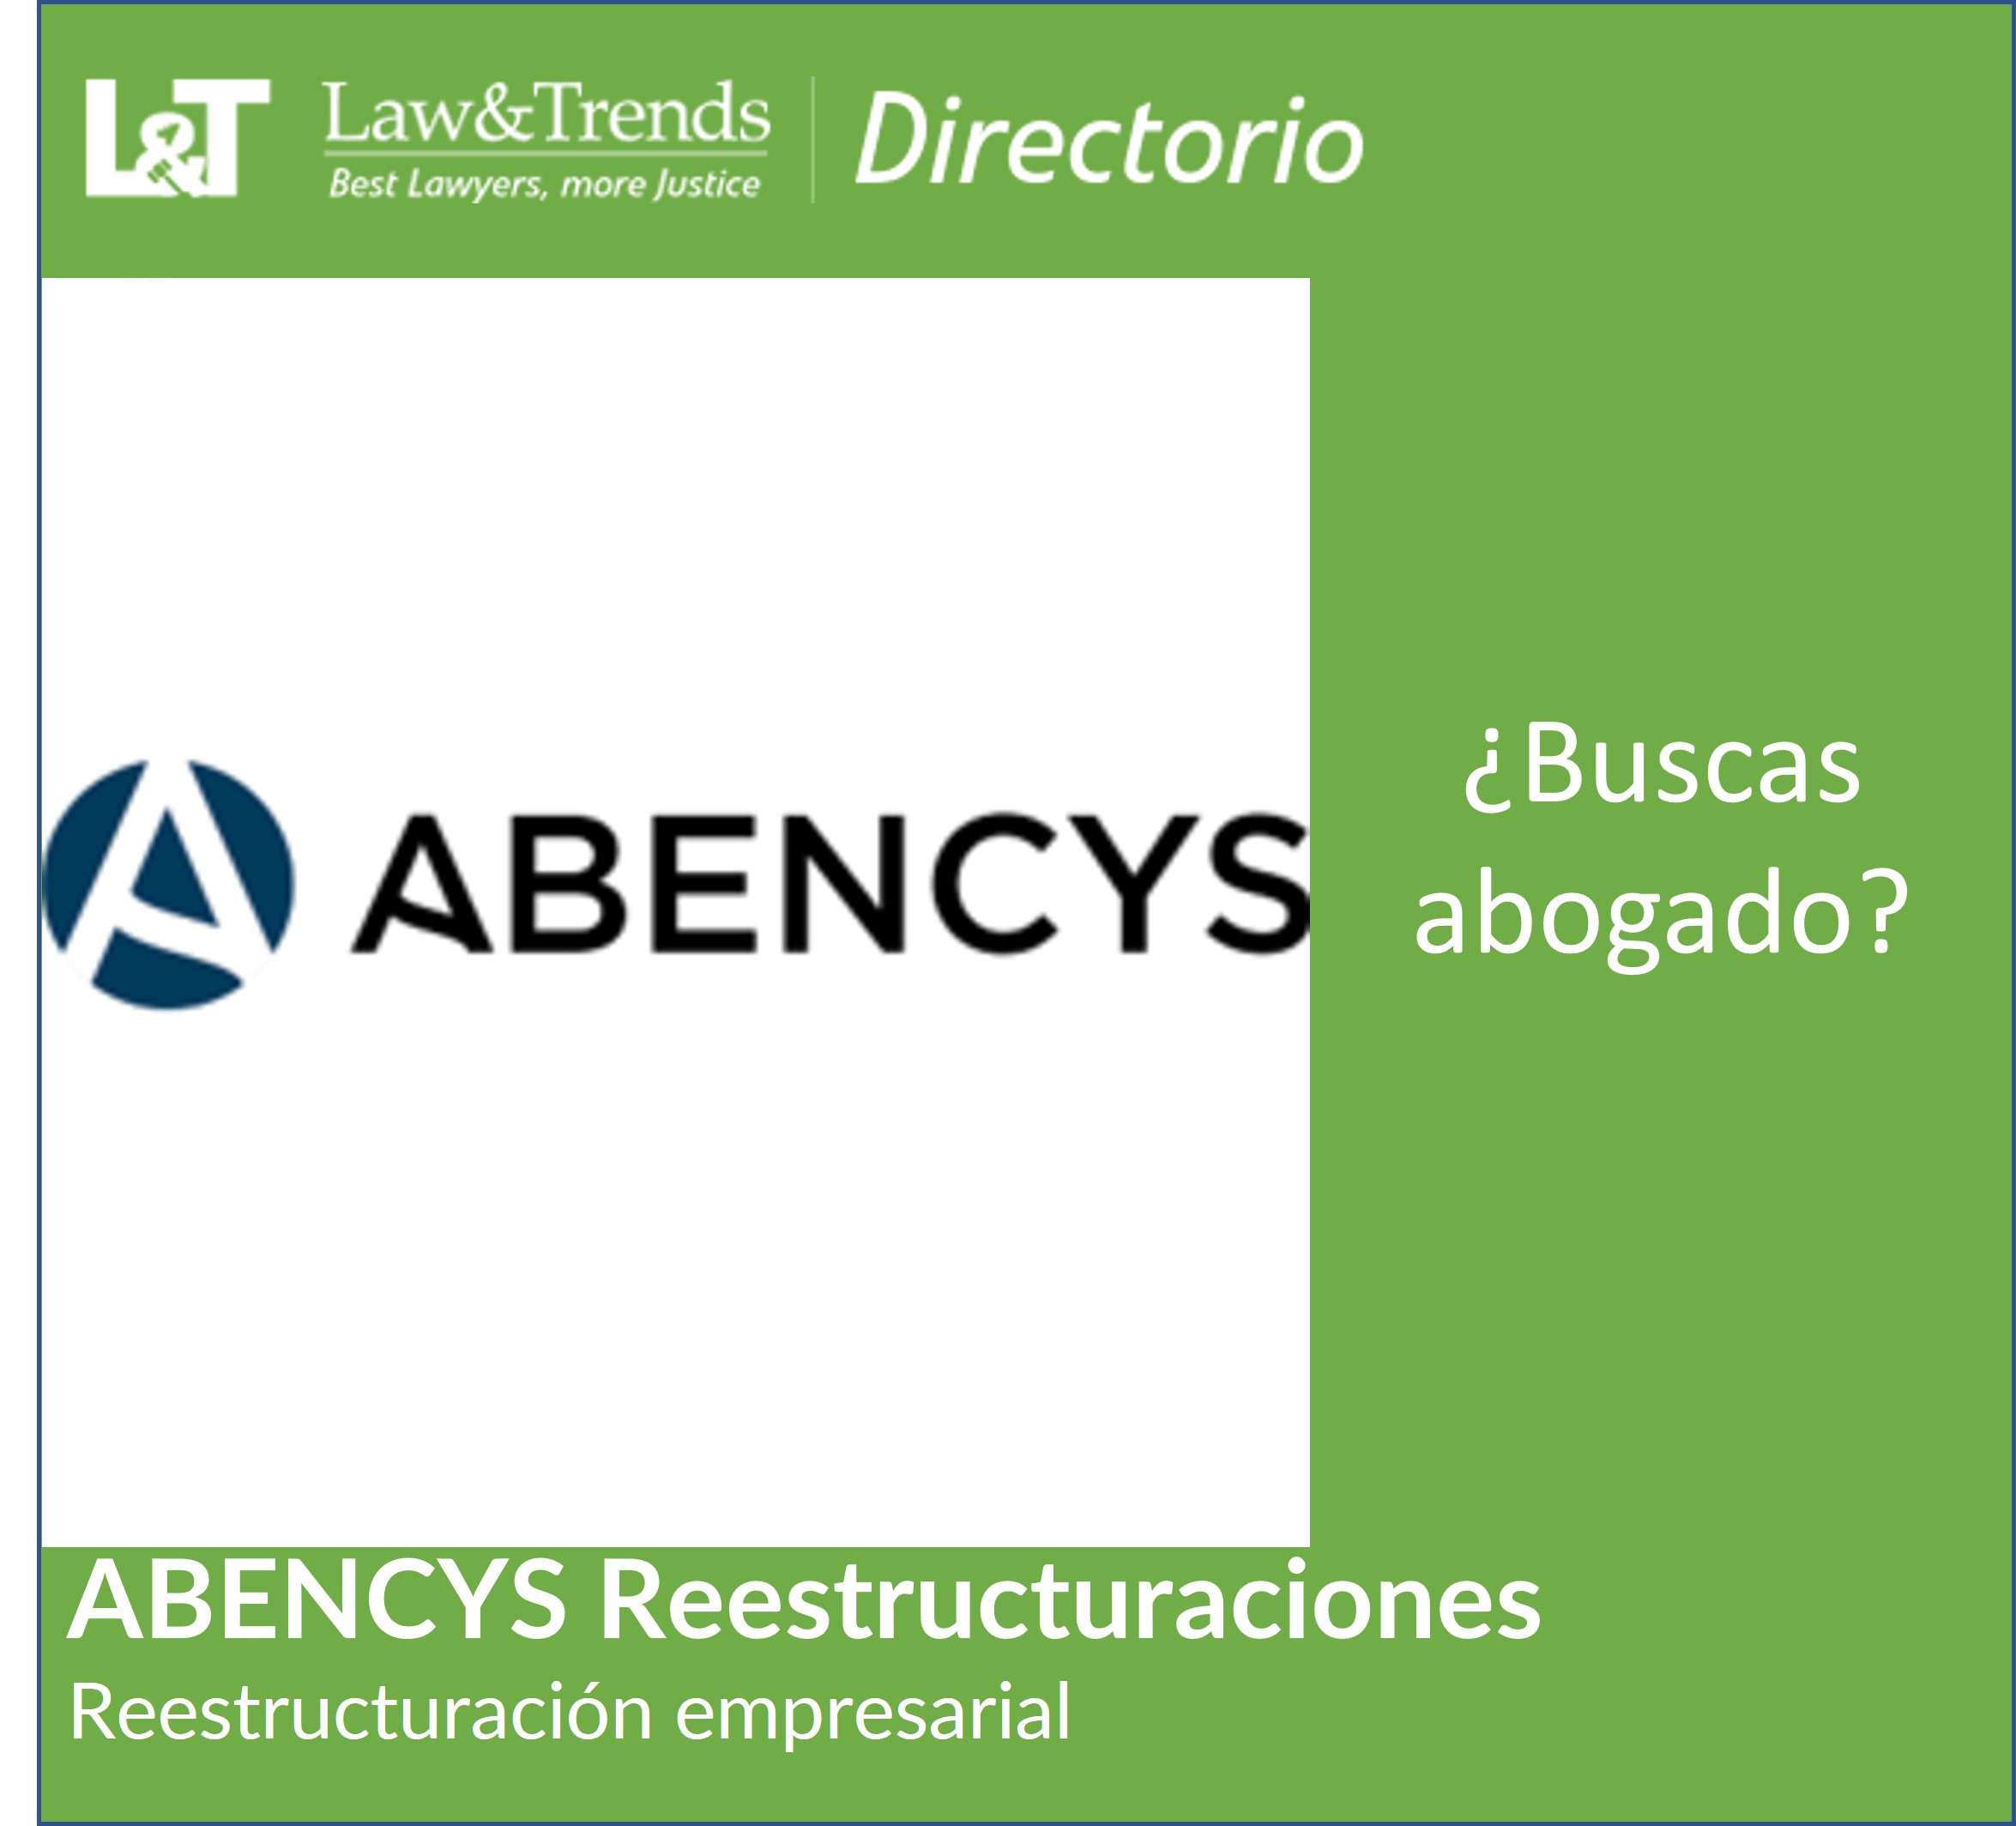 abencys-reestructuraciones Madrid
